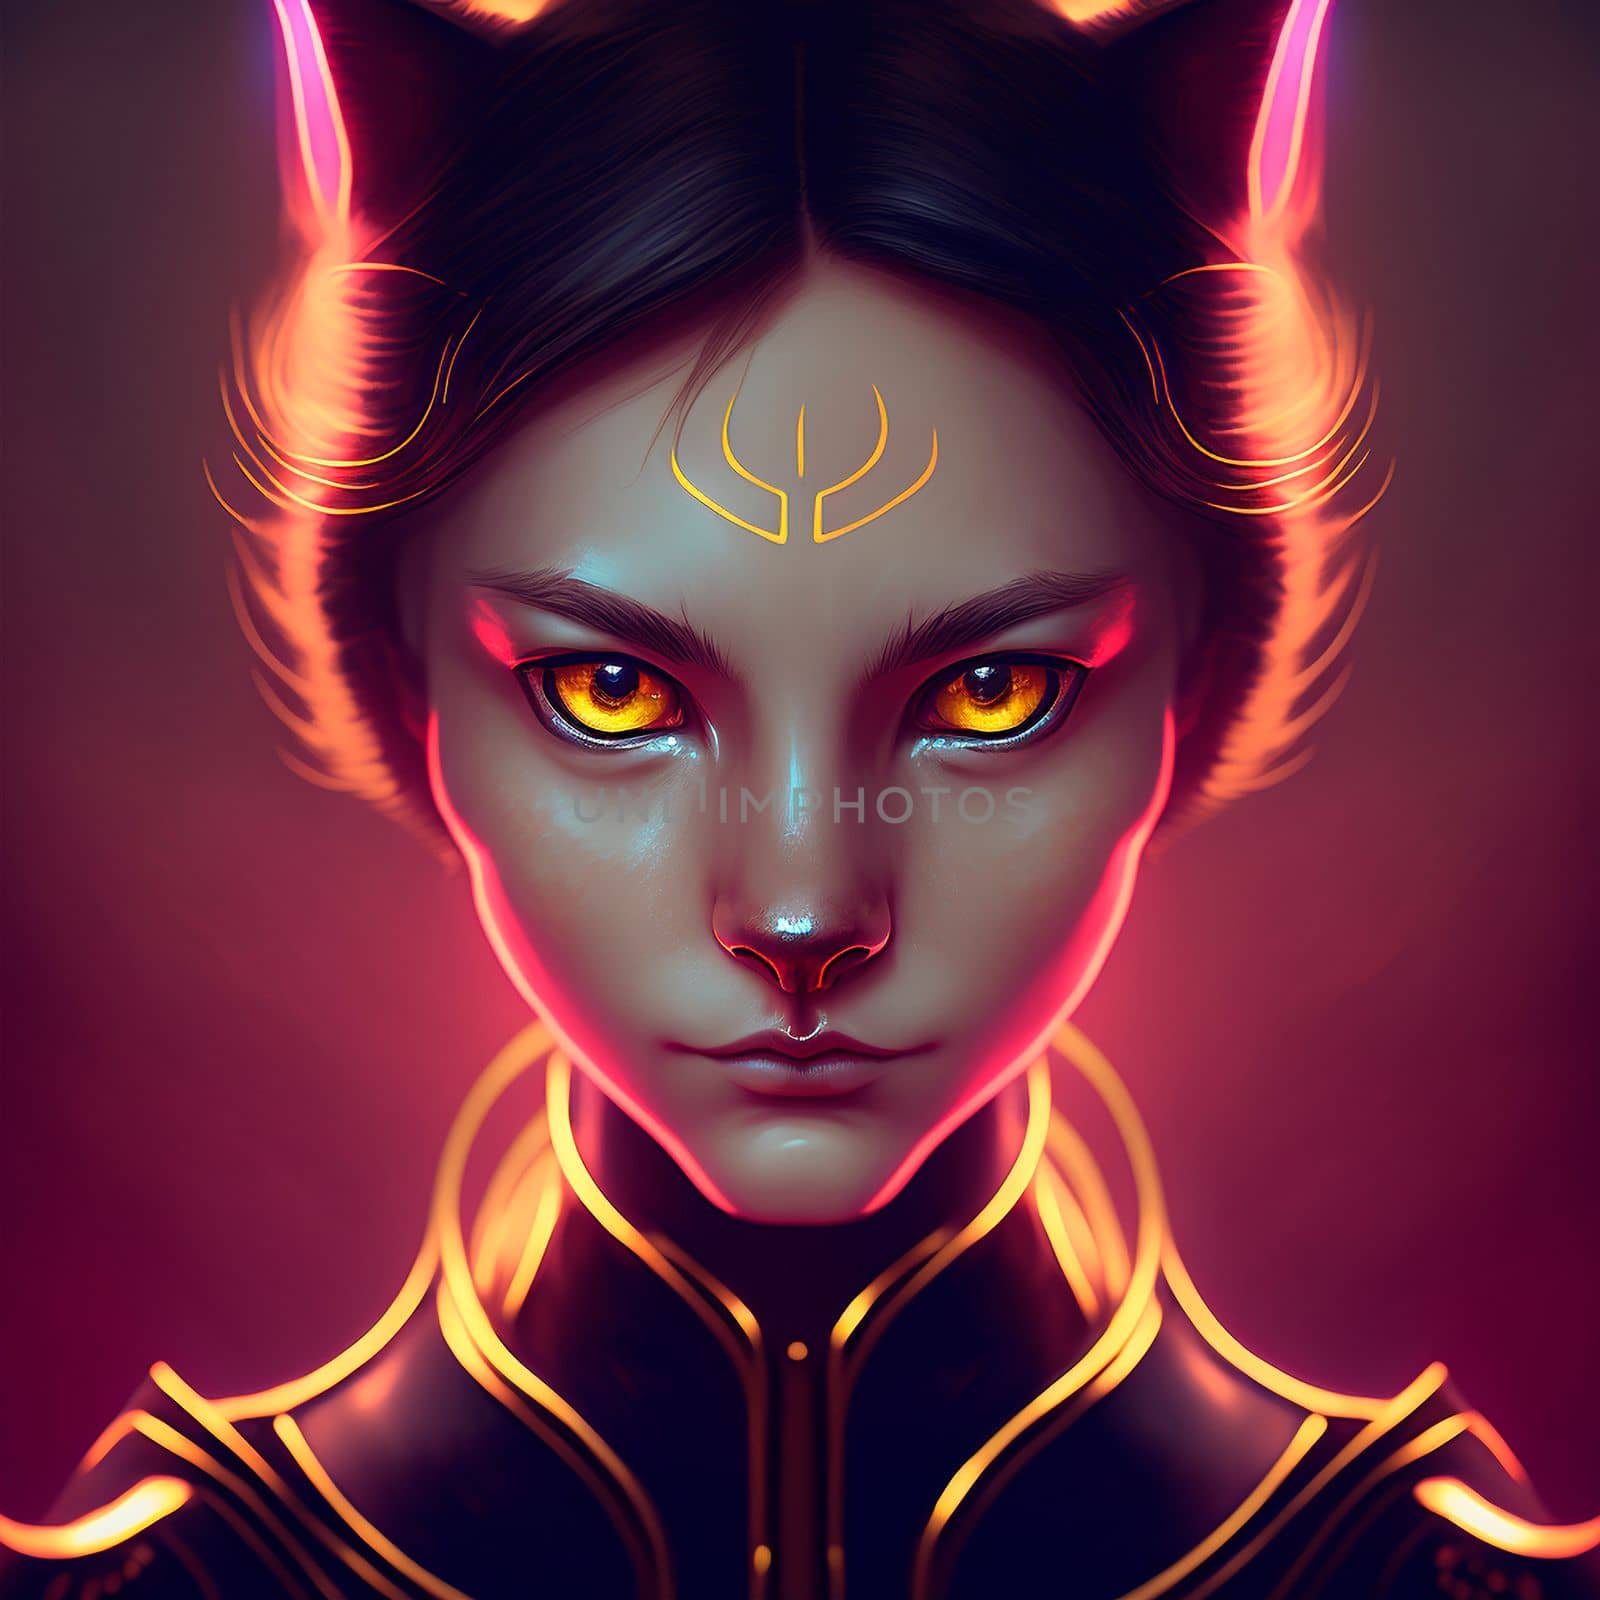 Cat girl in armor. High quality illustration